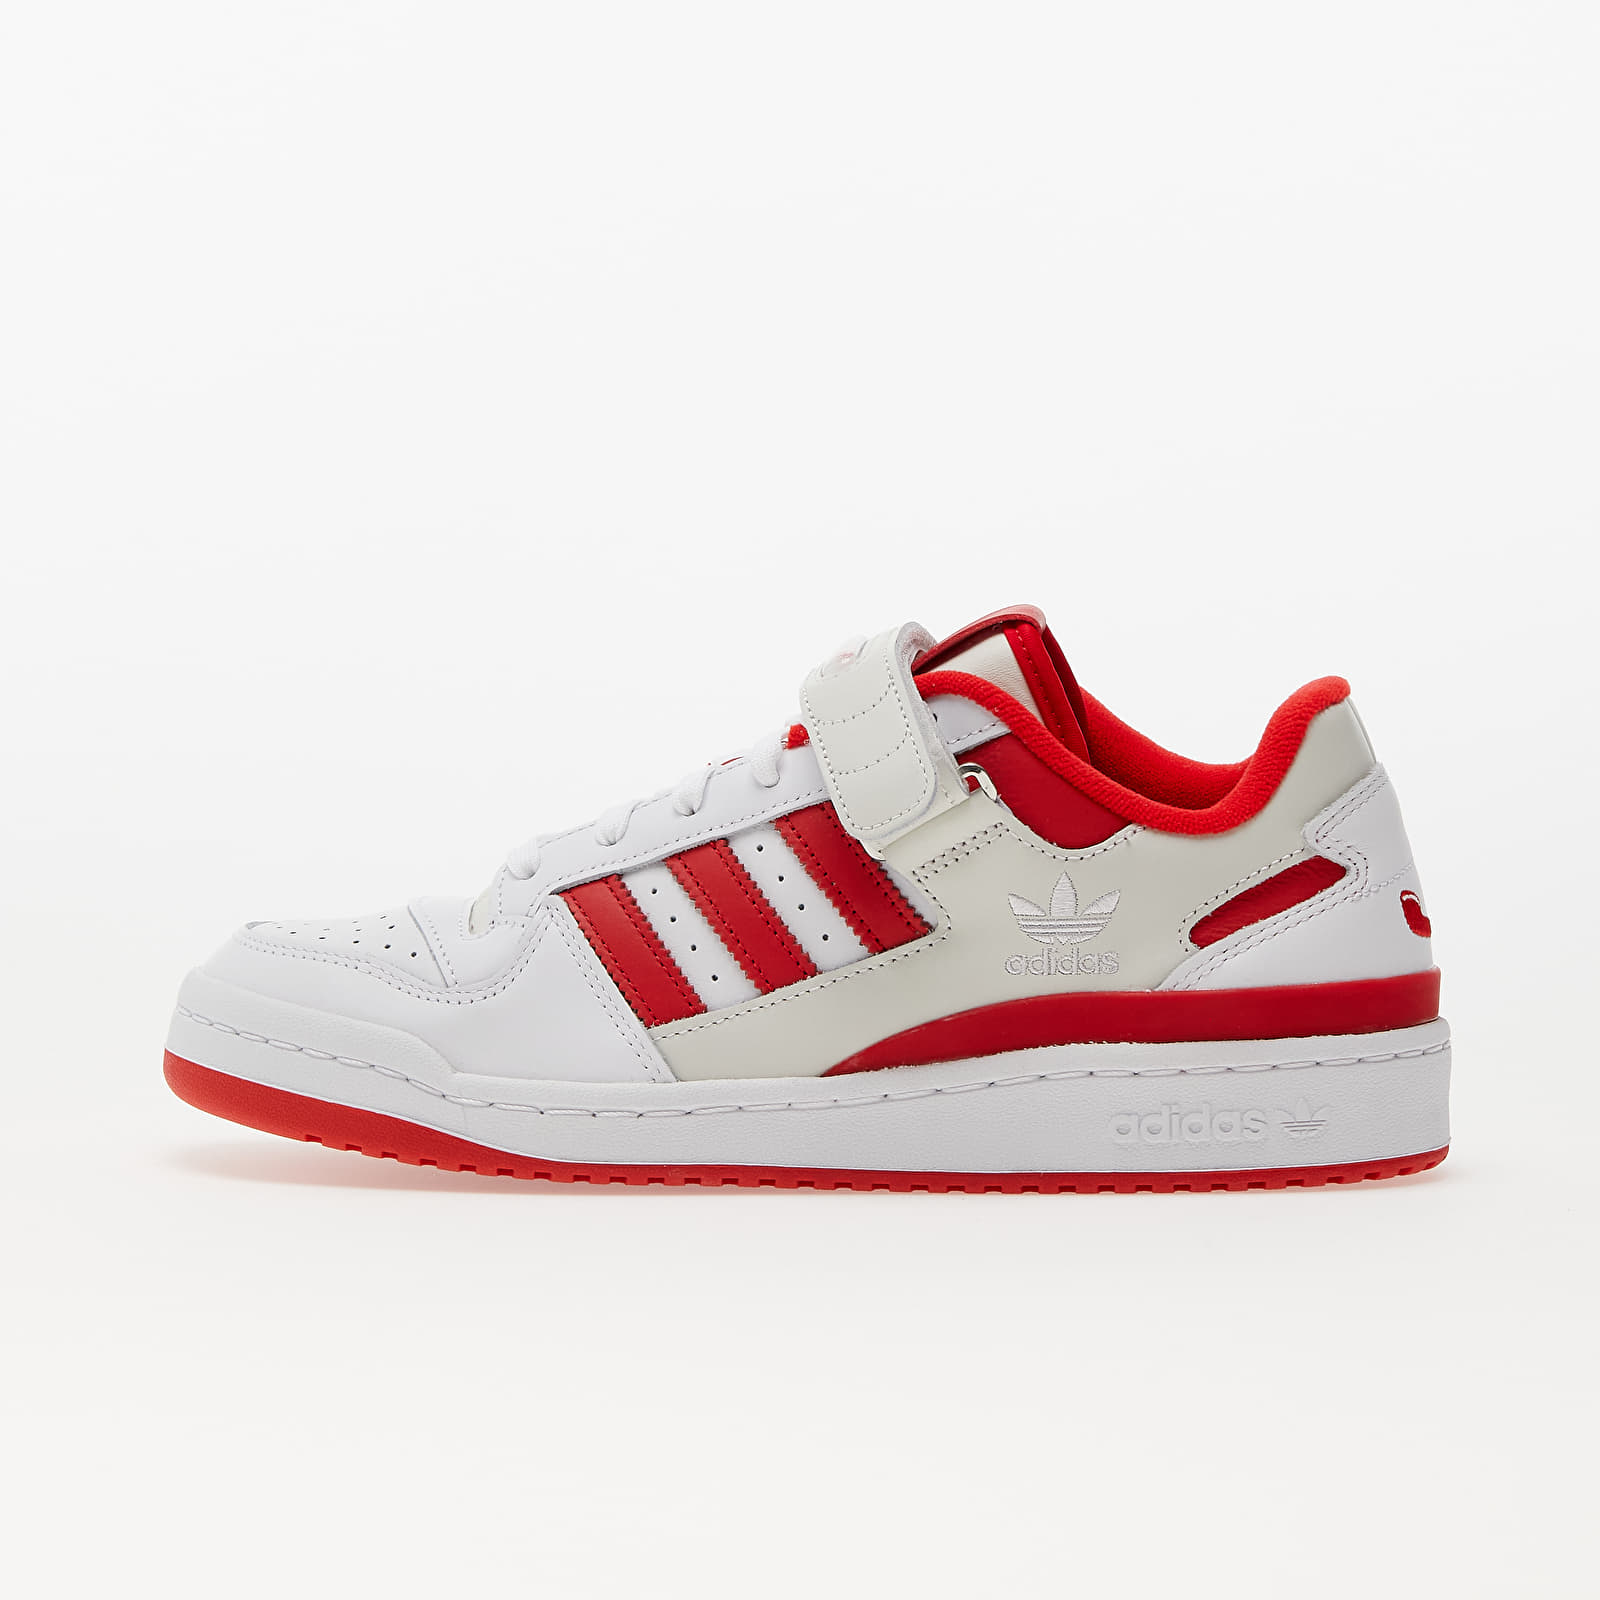 Chaussures et baskets homme adidas x Trap Kitchen Forum Low Ftw White/ Ftw White/ Vivid Red